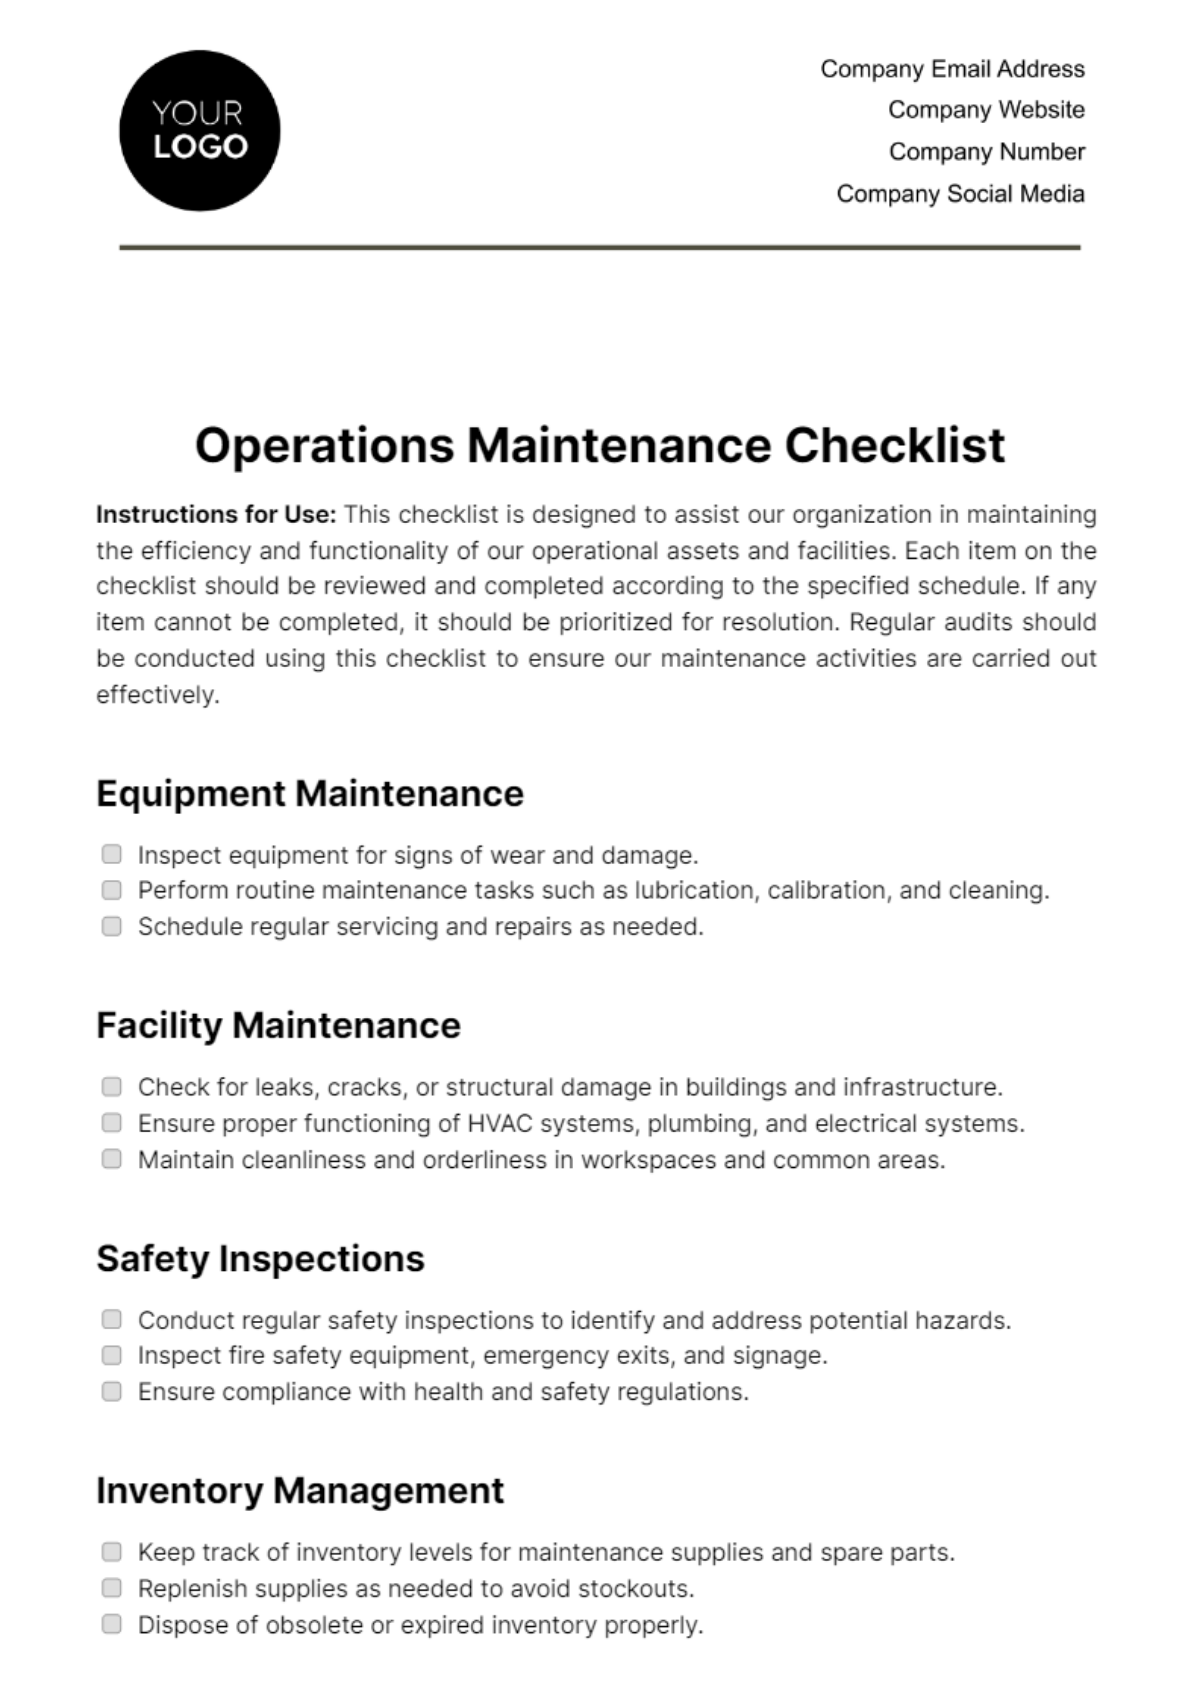 Free Operations Maintenance Checklist Template